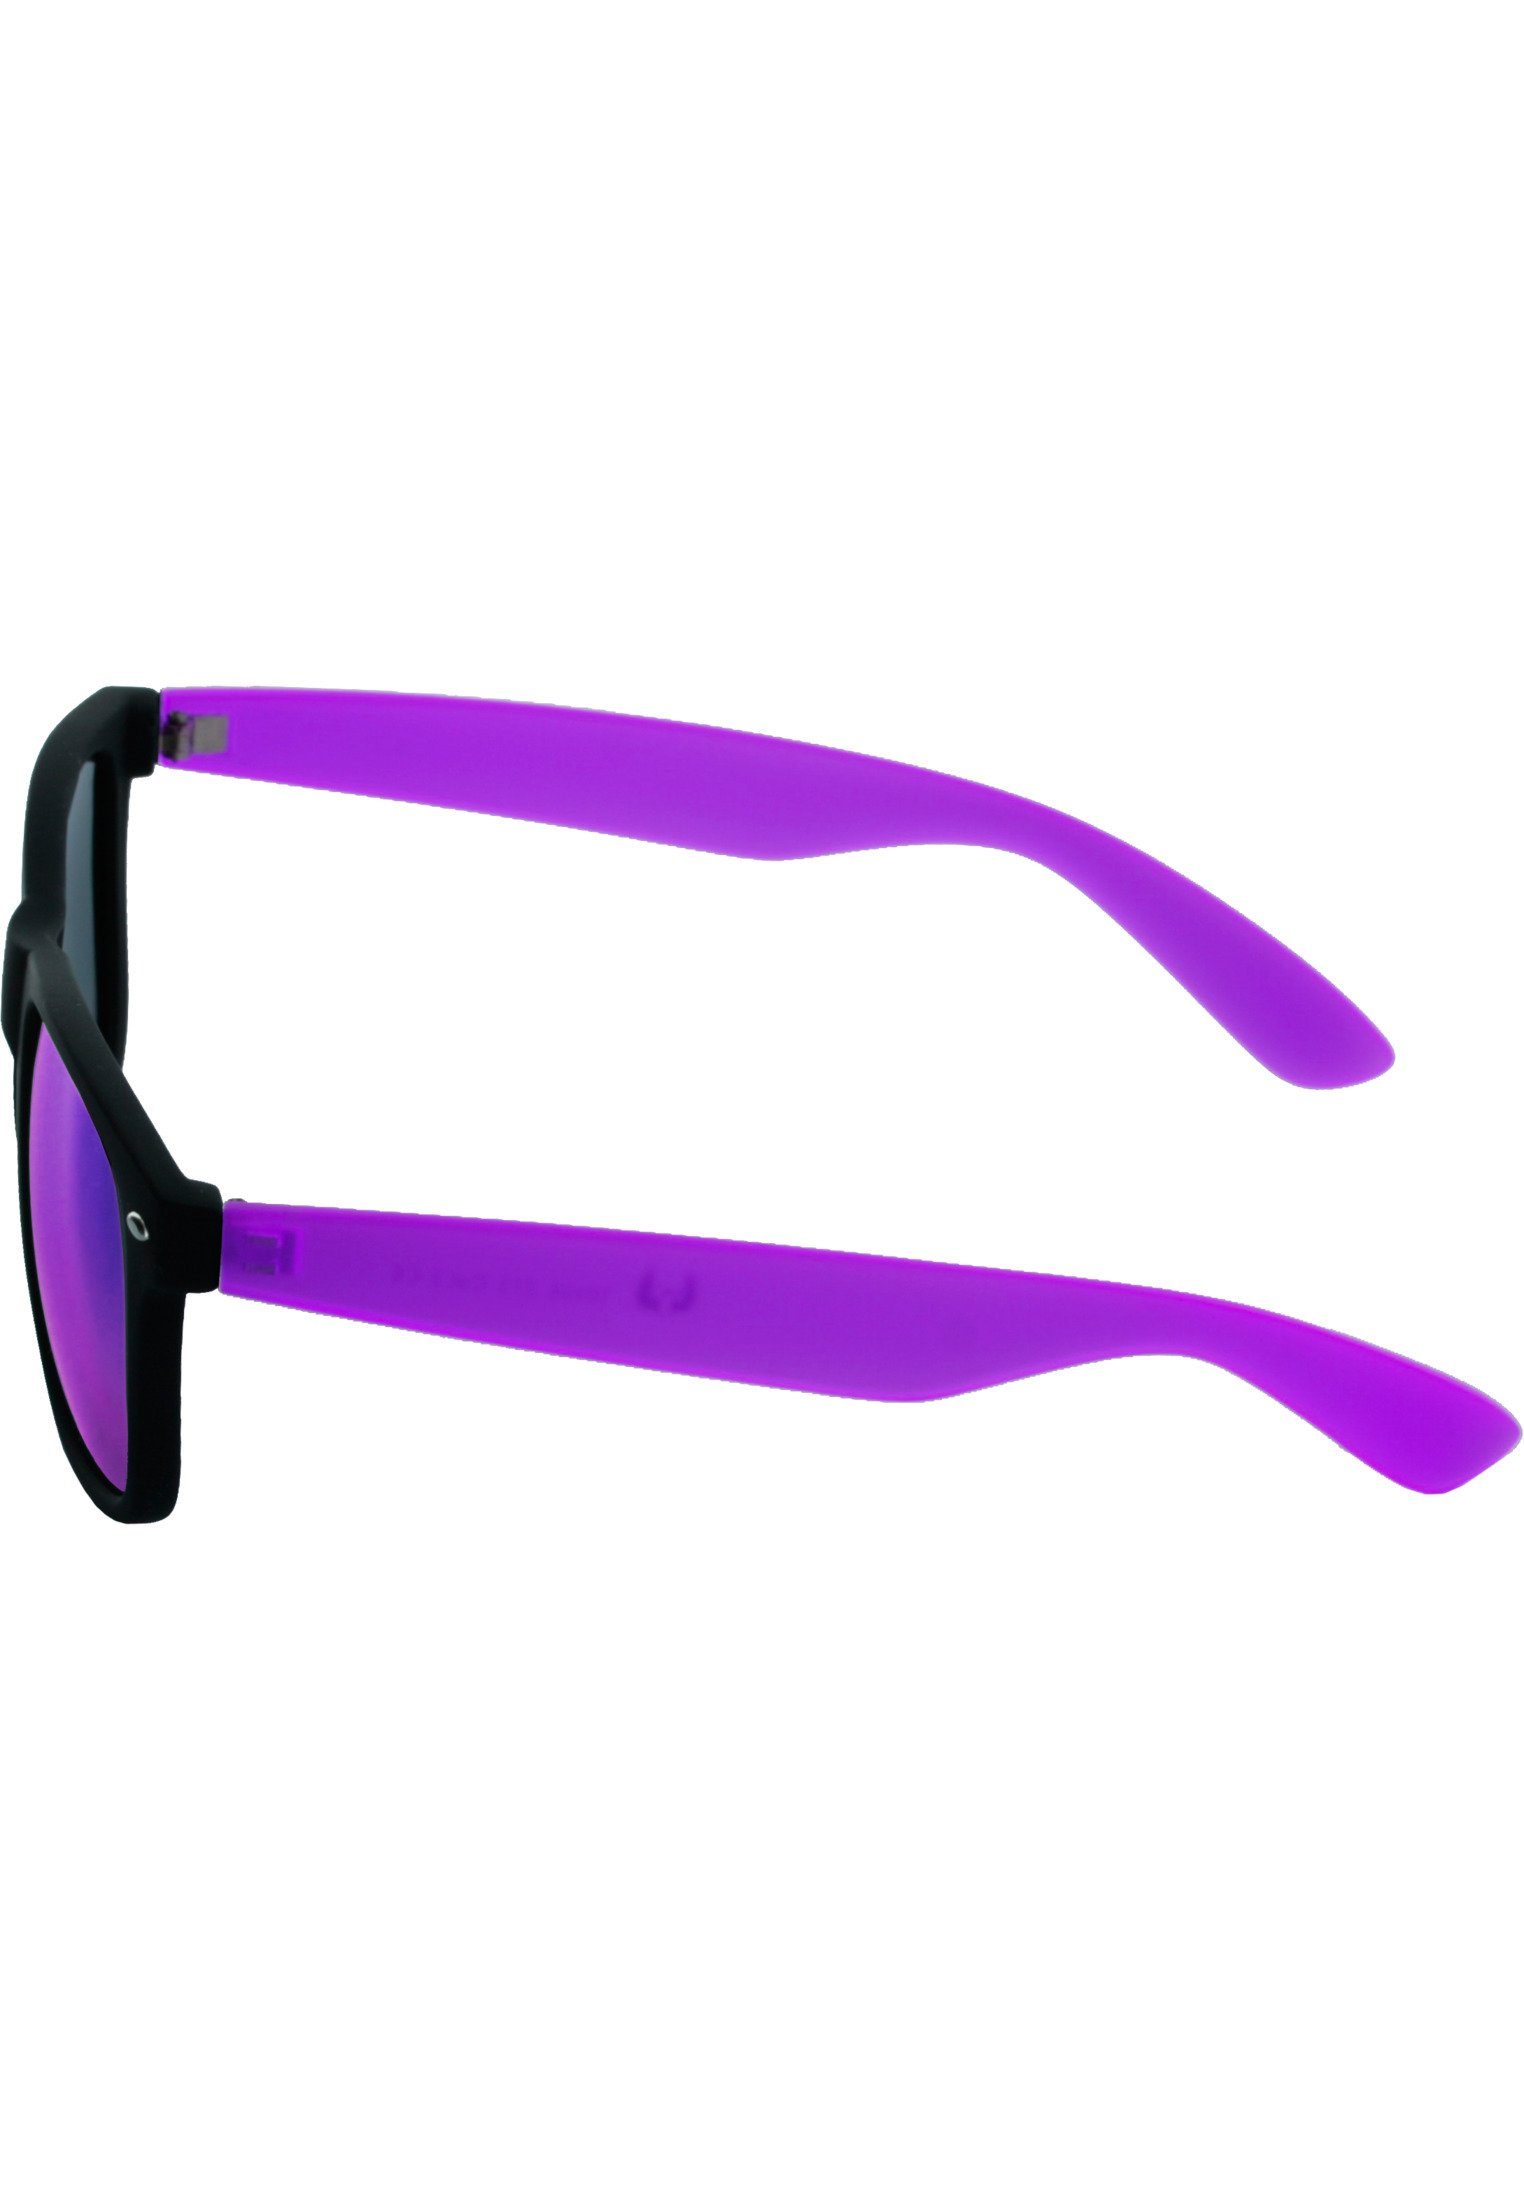 blk/pur/pur Sonnenbrille MSTRDS Accessoires Likoma Mirror Sunglasses